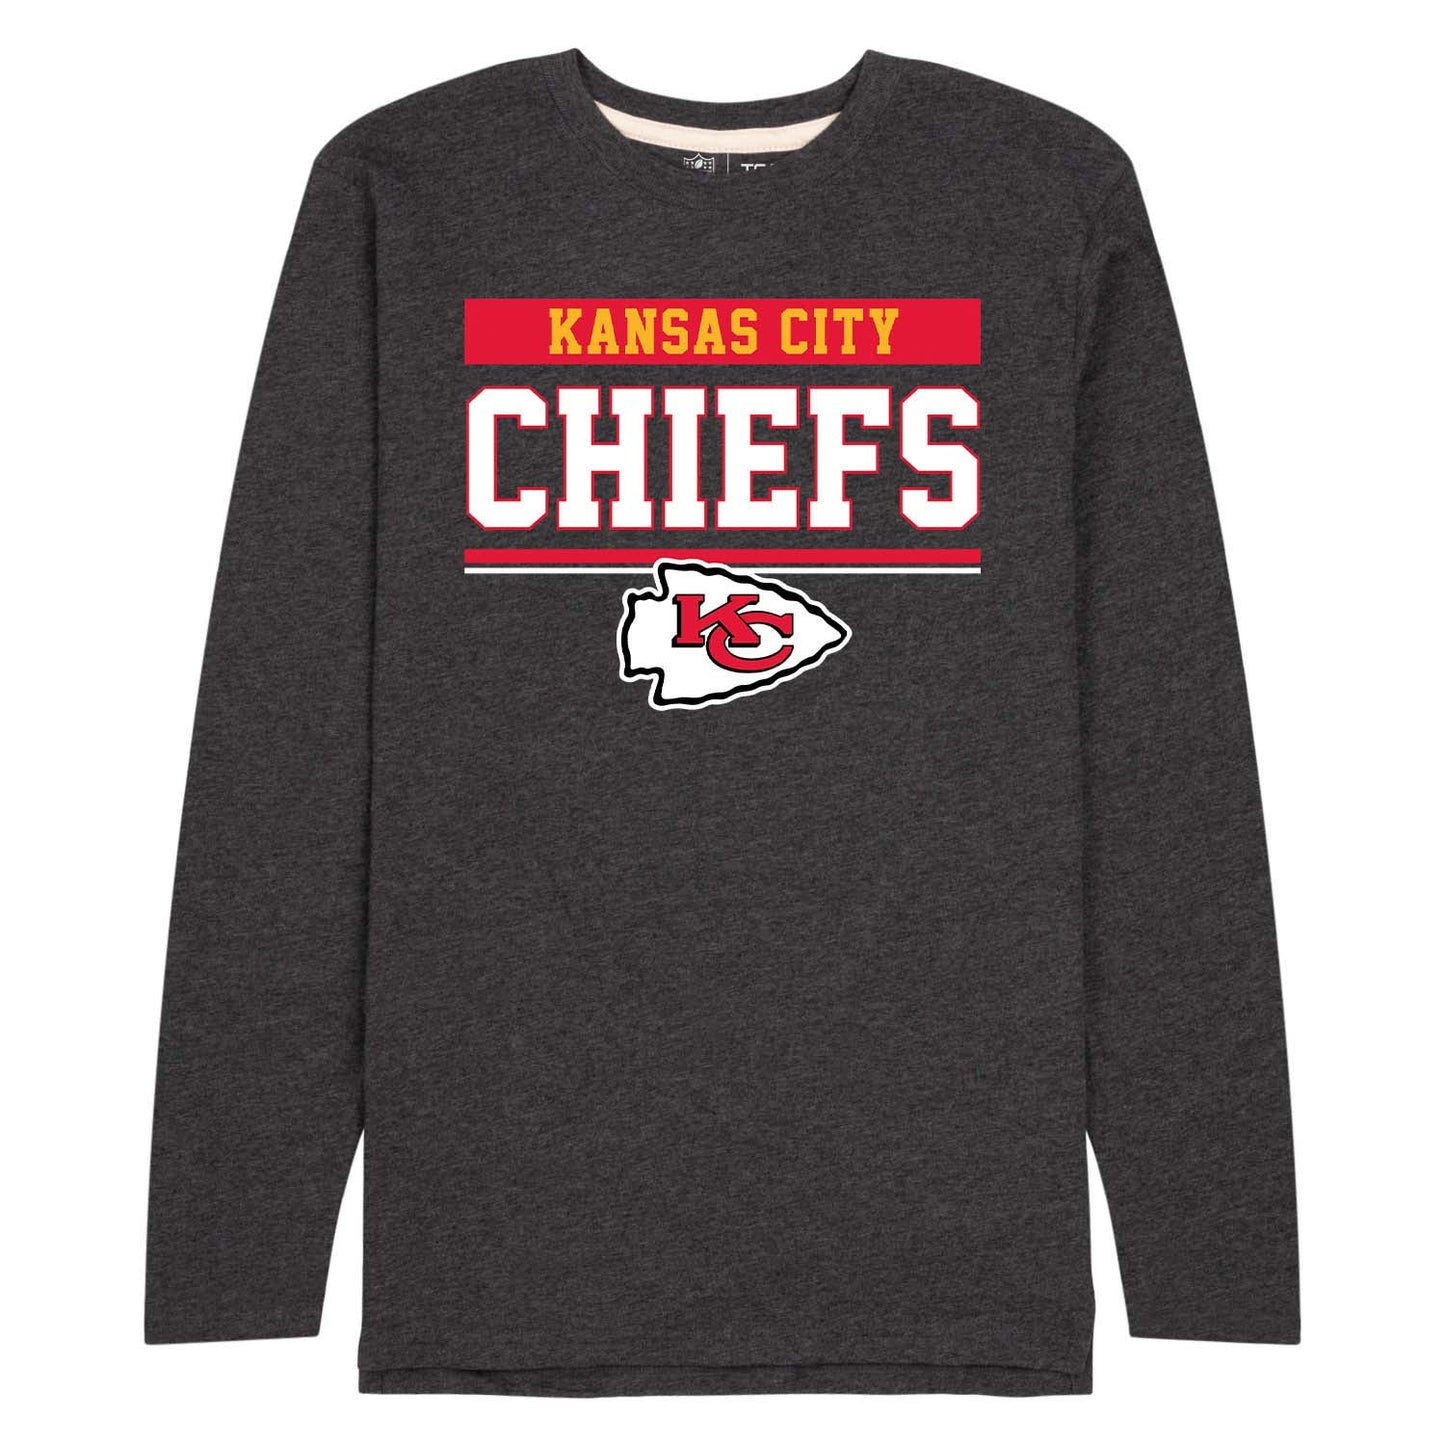 Kansas City Chiefs NFL Adult Charcoal Long Sleeve T Shirt - Charcoal